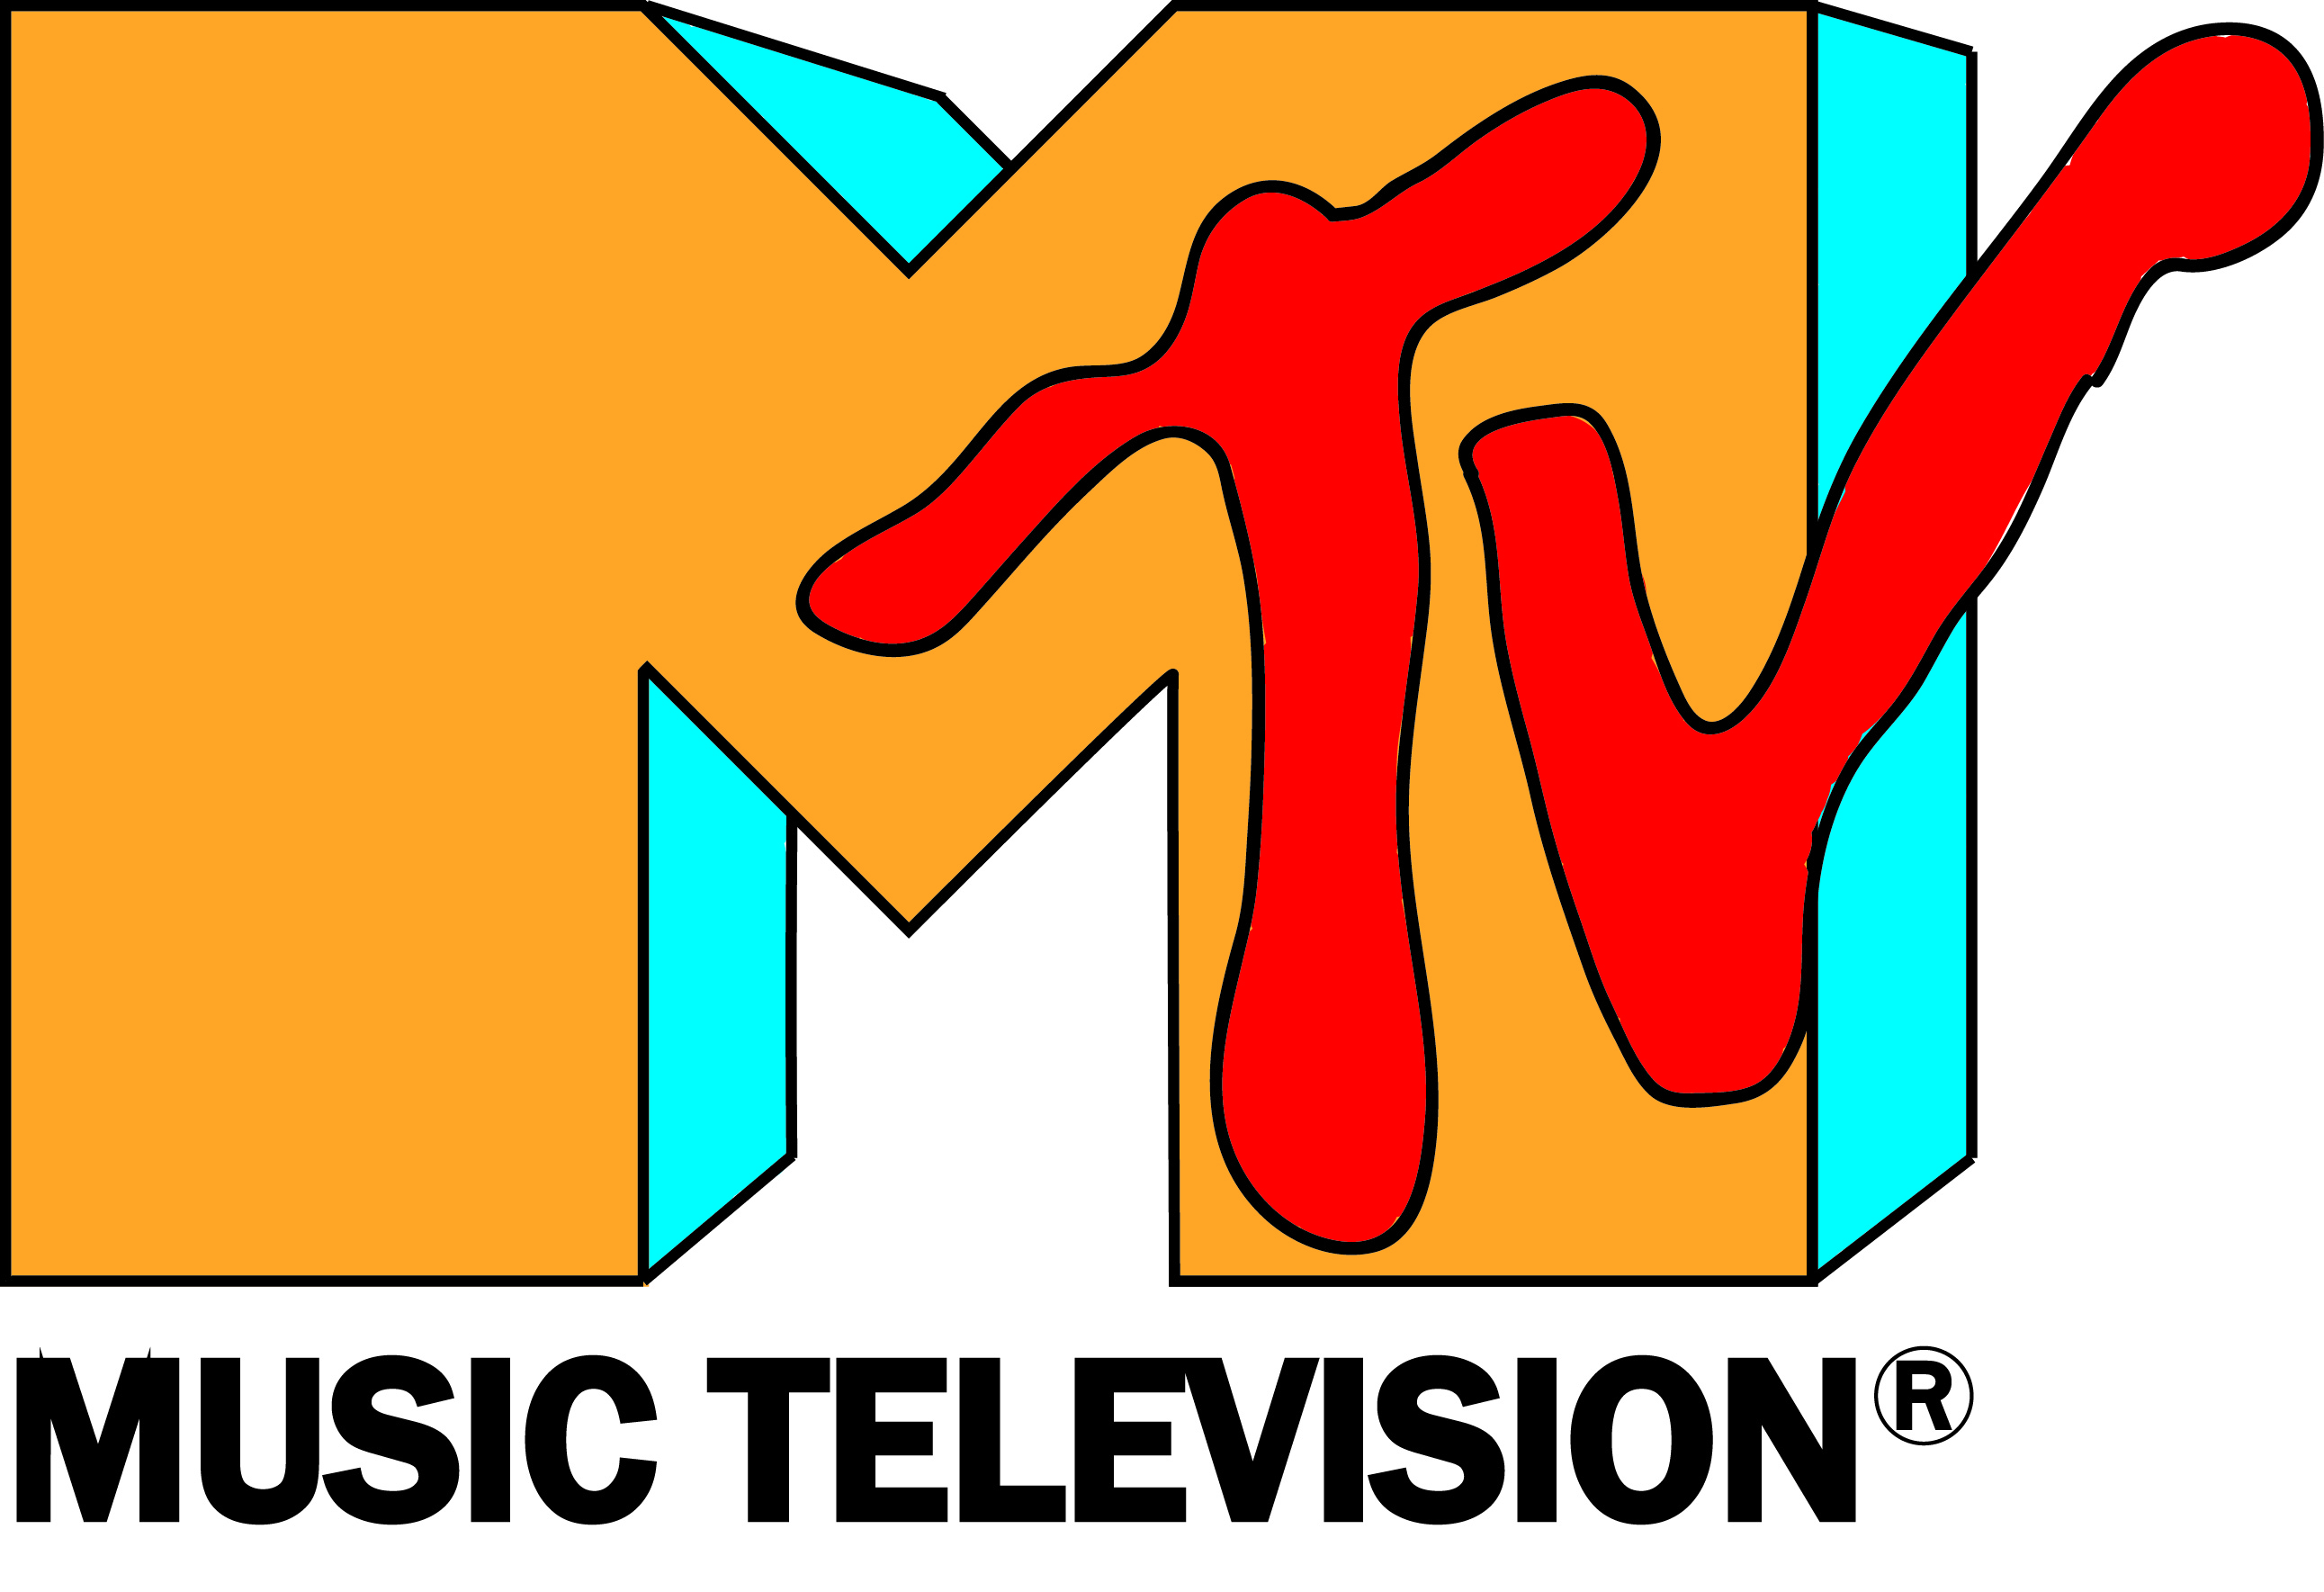 MTV IS BRINGING BACK MUSIC WITH NEW SHOW ‘WONDERLAND’